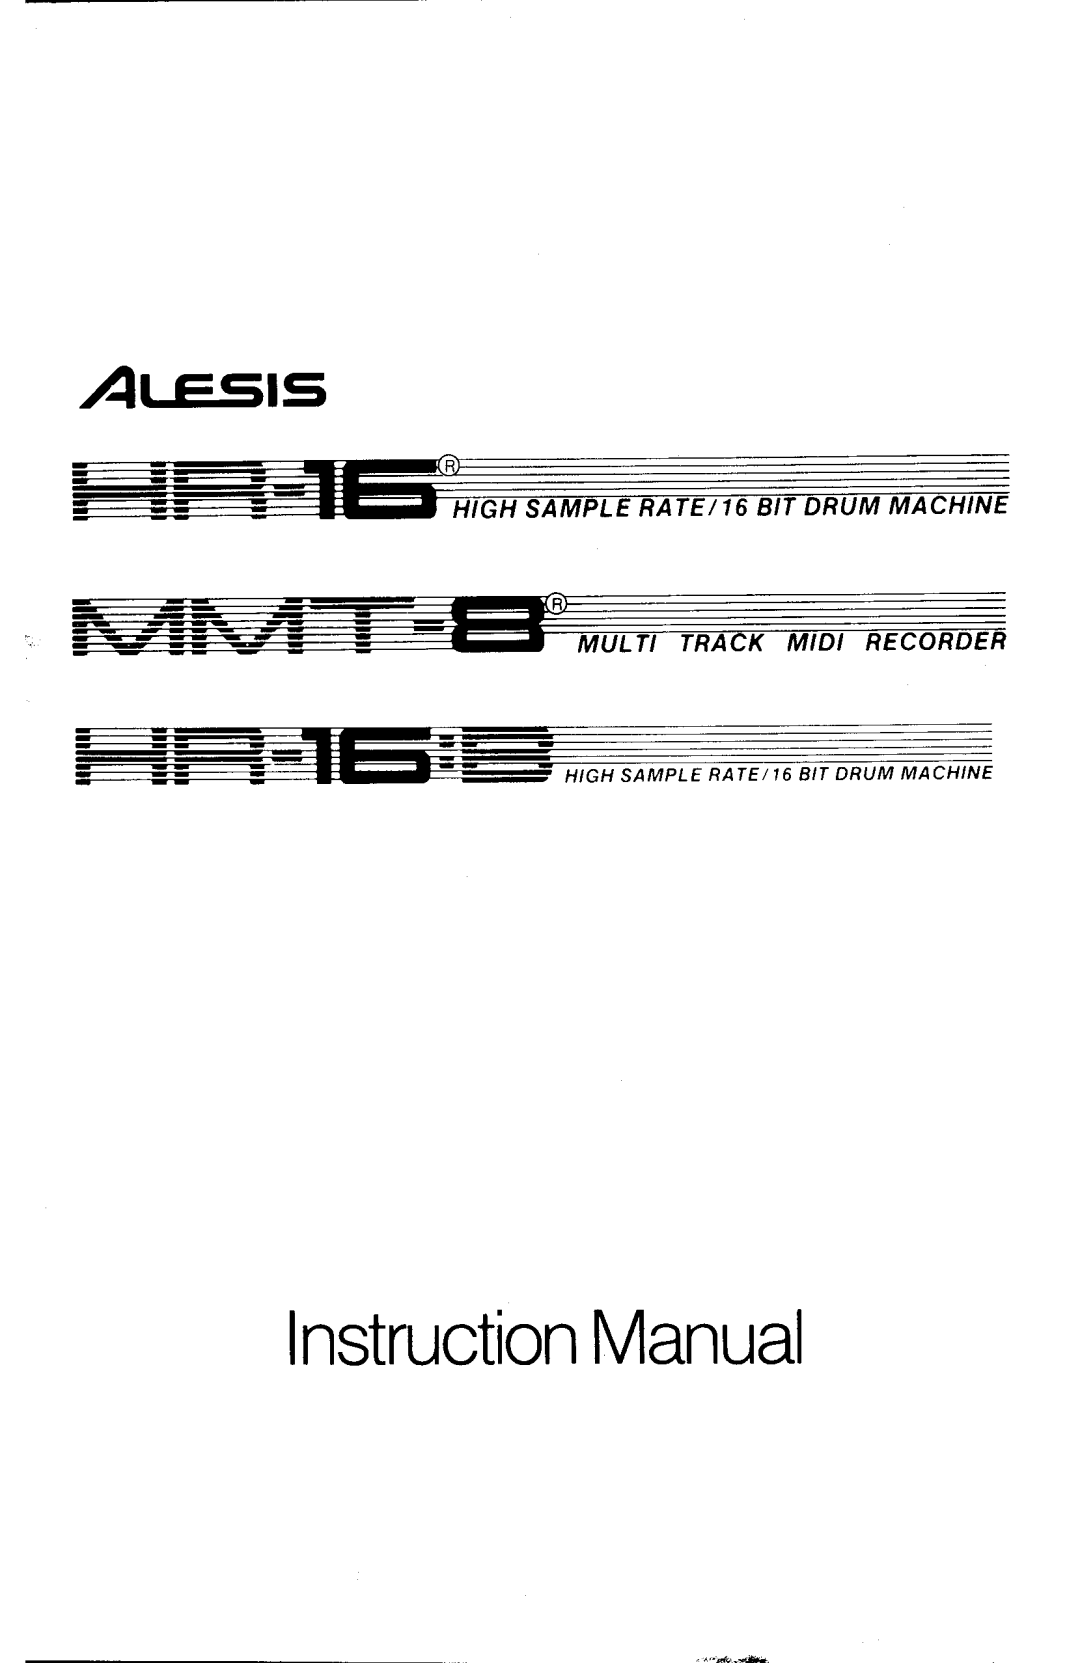 Alesis HR-16:B, MMT-8 instruction manual InstructionManual 